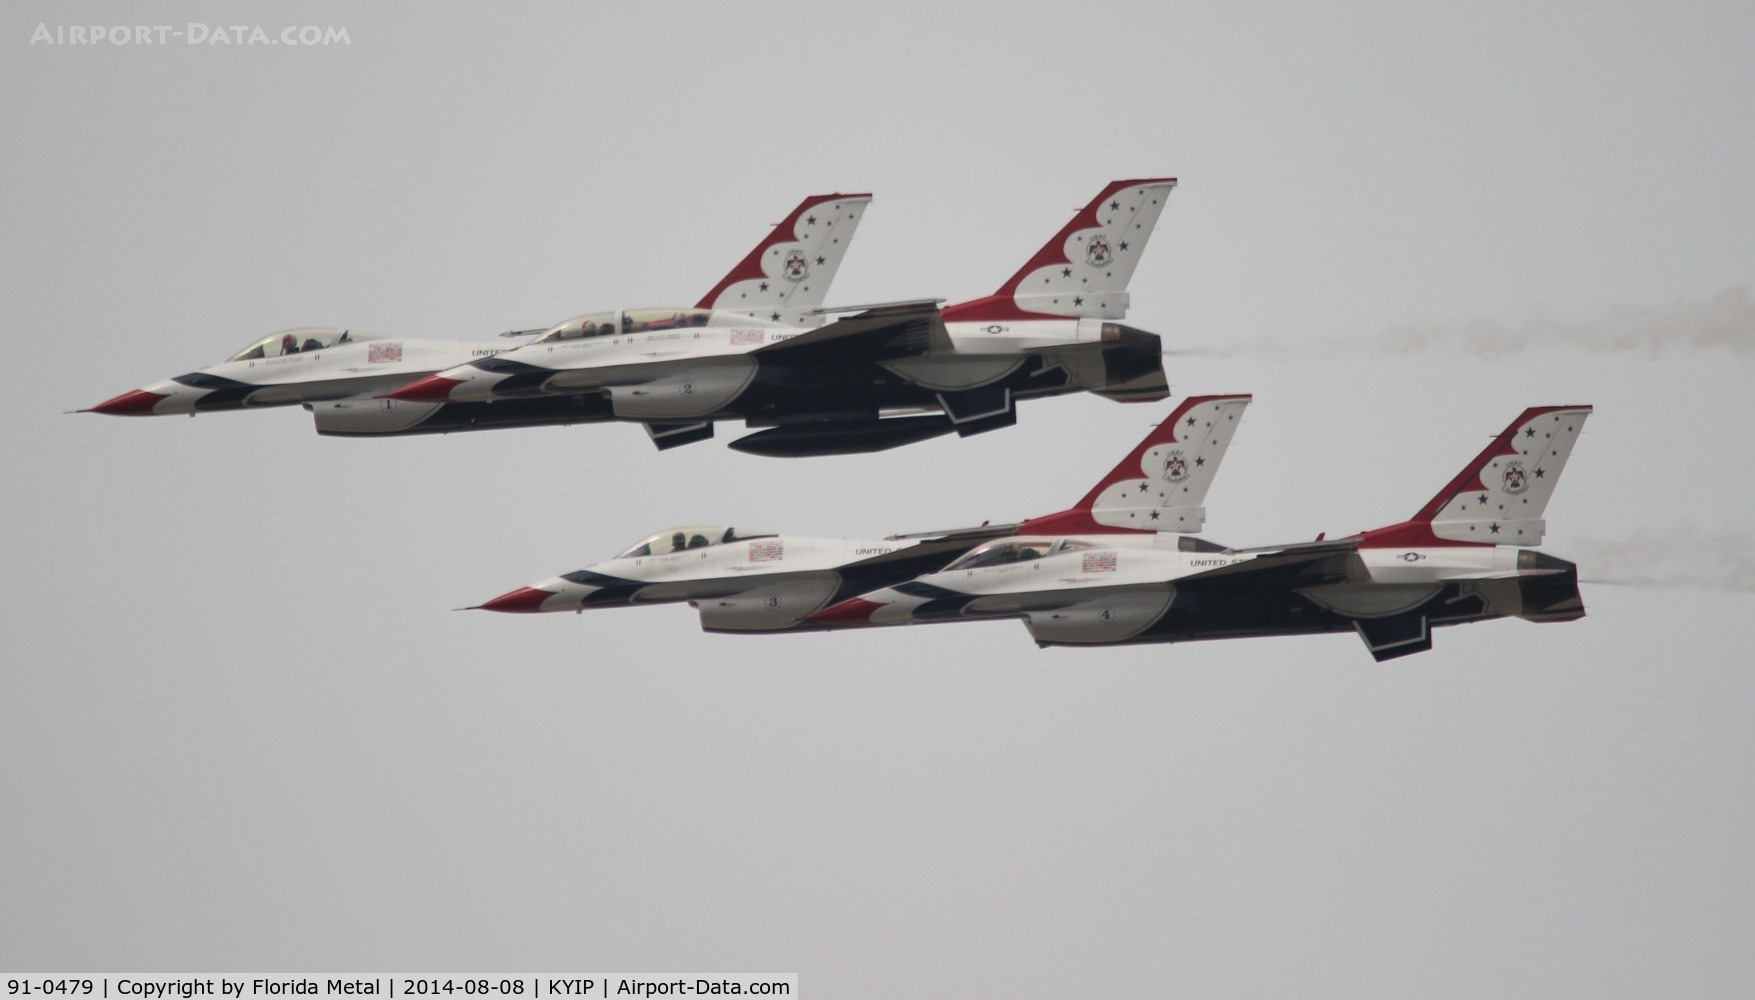 91-0479, 1991 General Dynamics F-16D Fighting Falcon C/N CD-34, Thunder over Michigan 2014